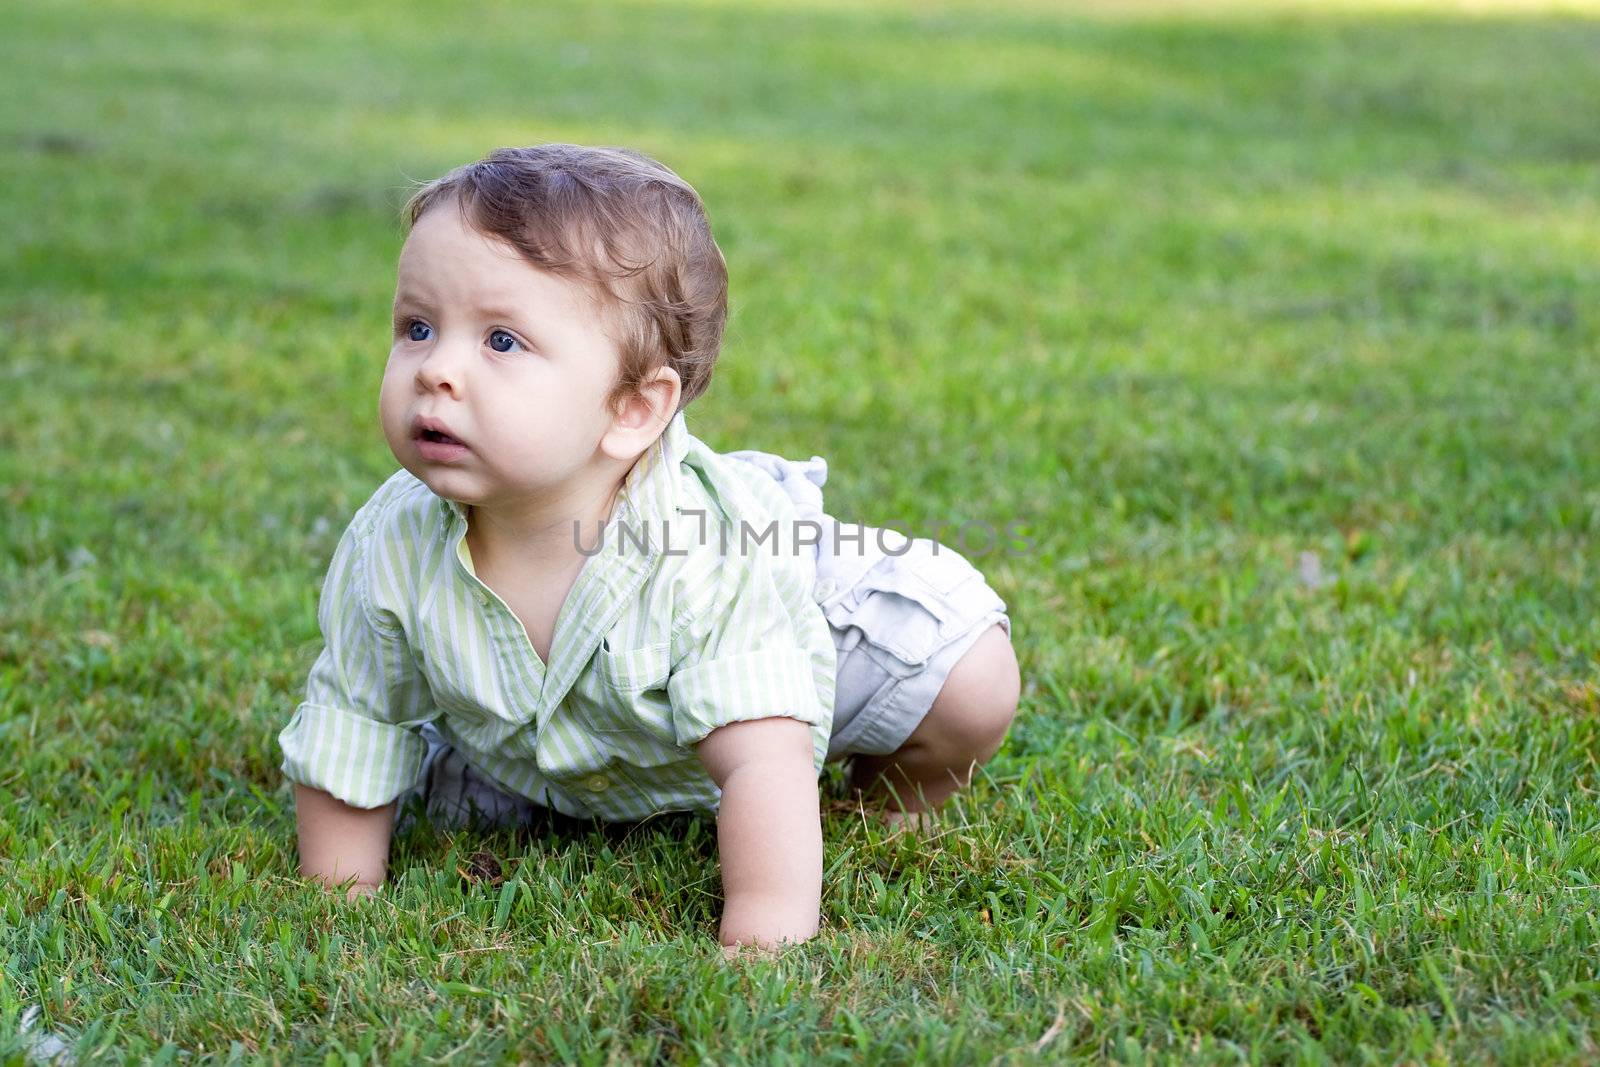 A little baby boy crawling through the green grass outdoors.